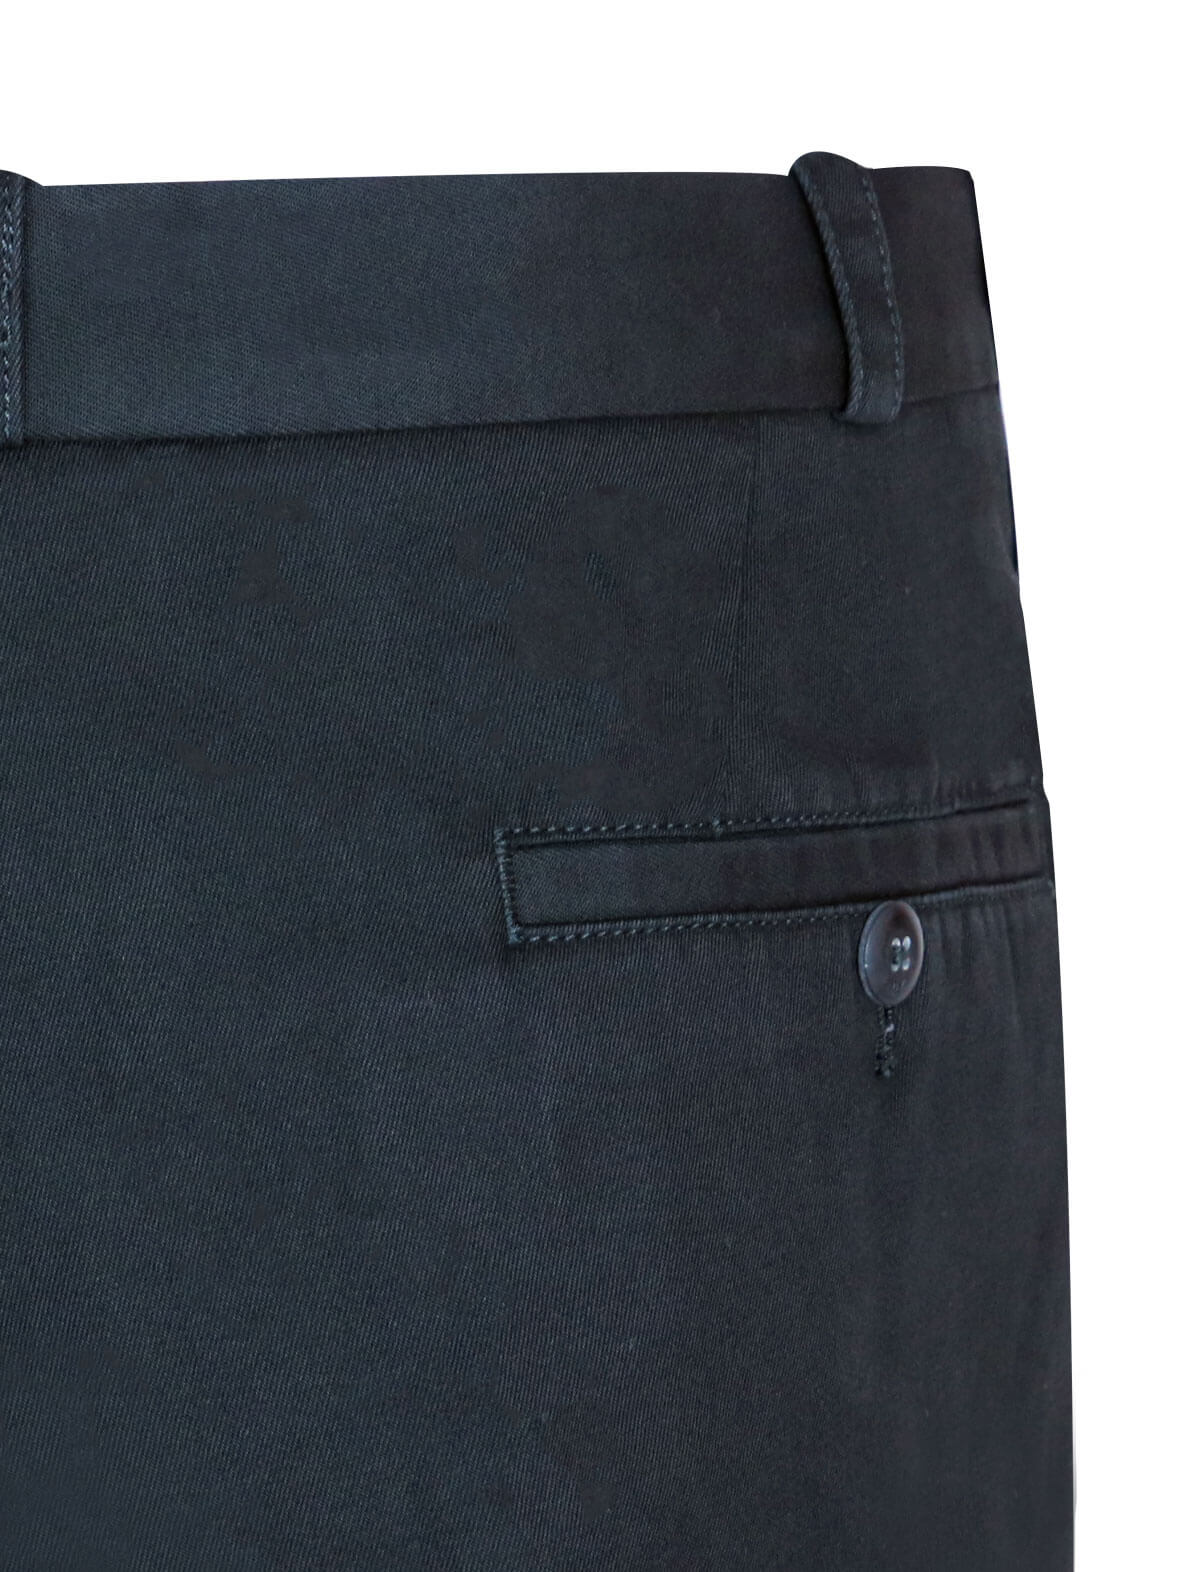 PT TORINO Cargo Pants in Black